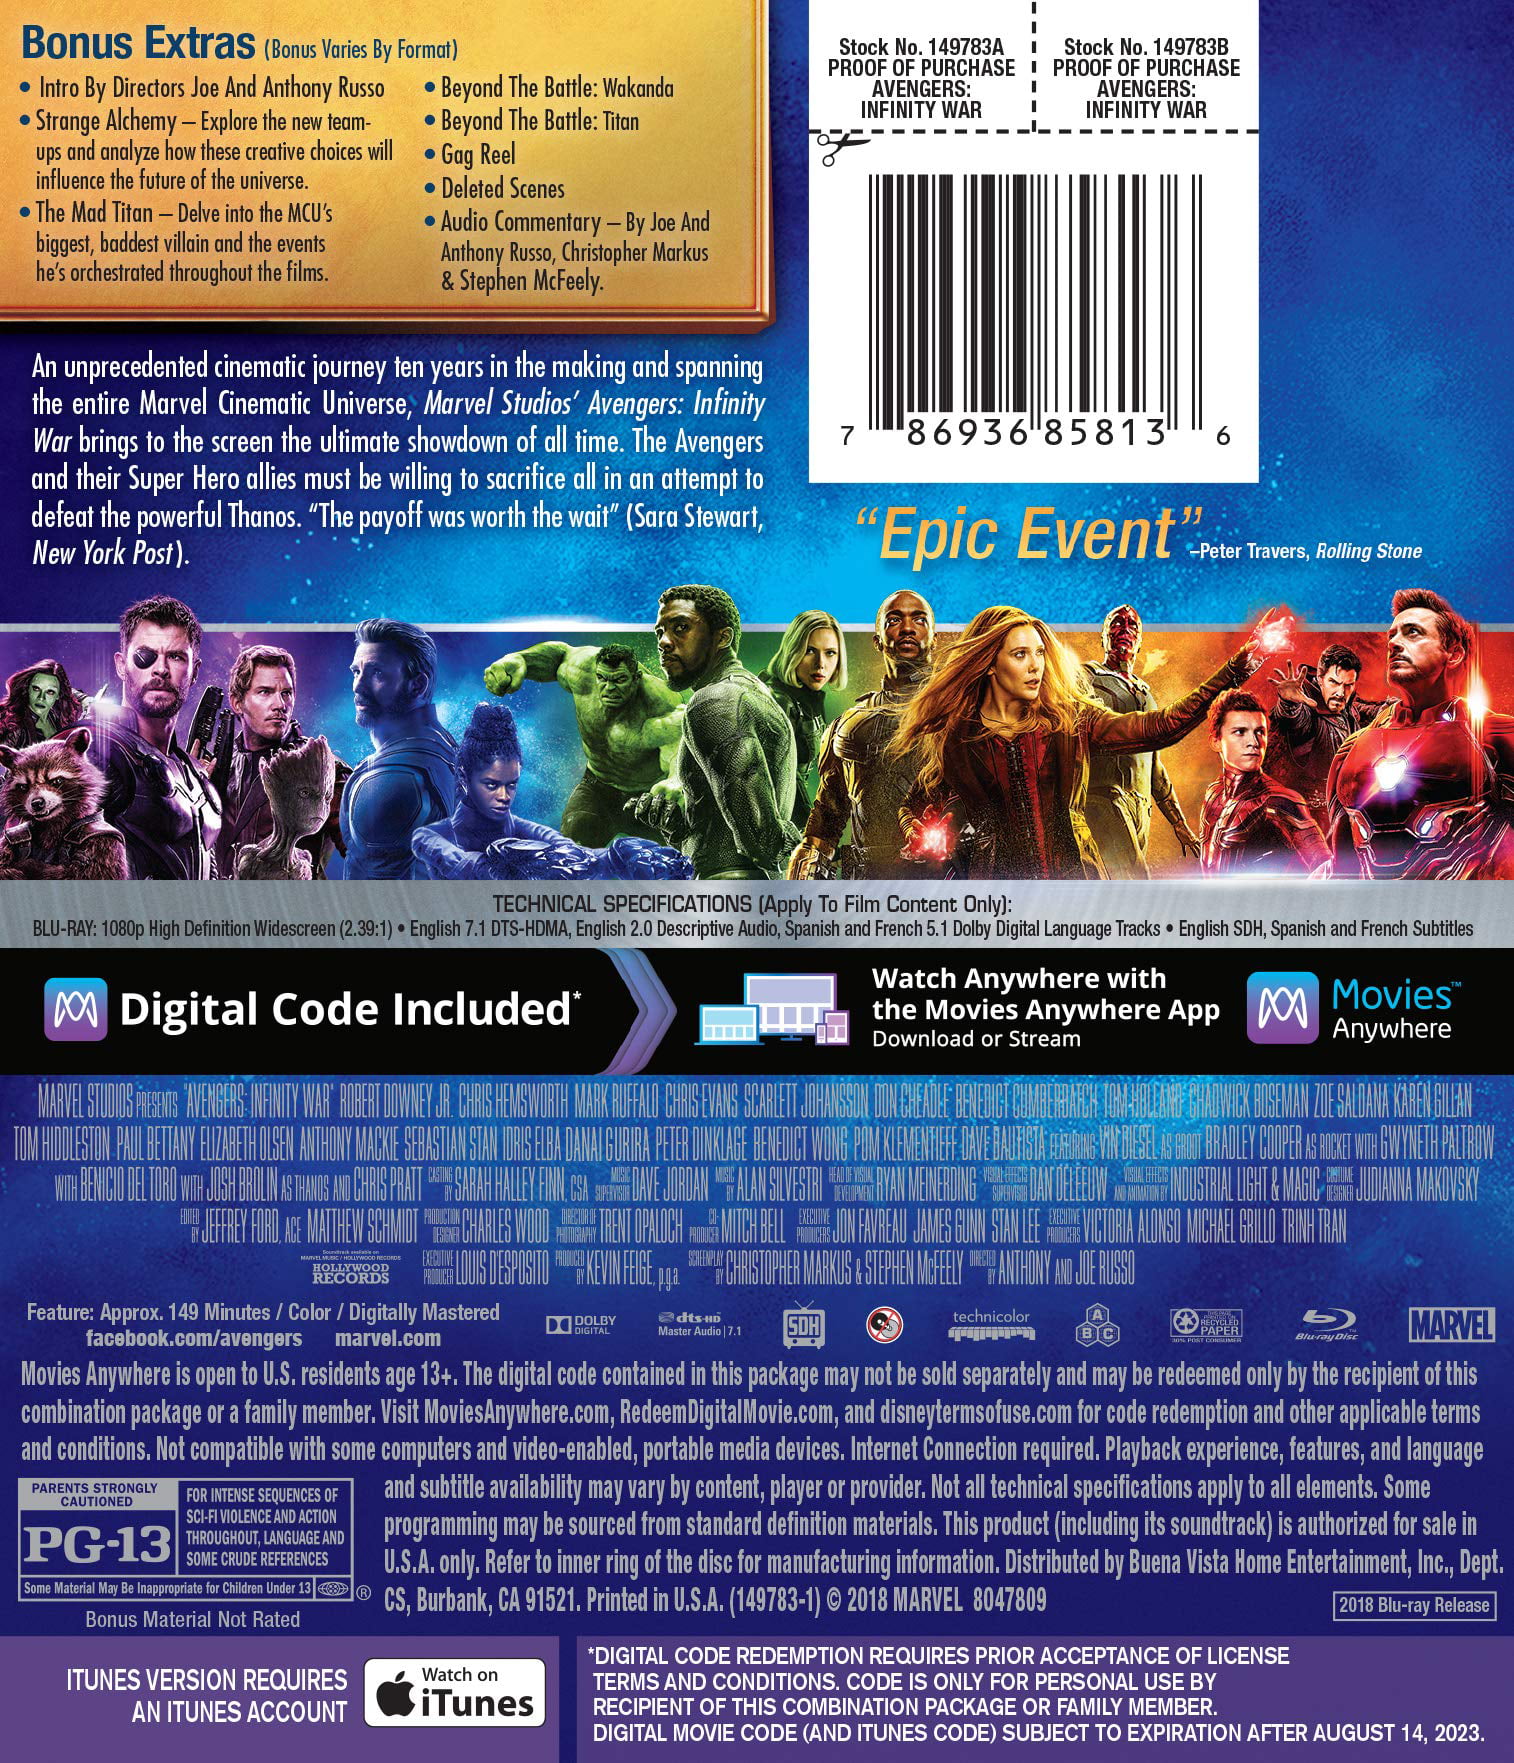  Avengers INFINITY WAR DVD : Movies & TV